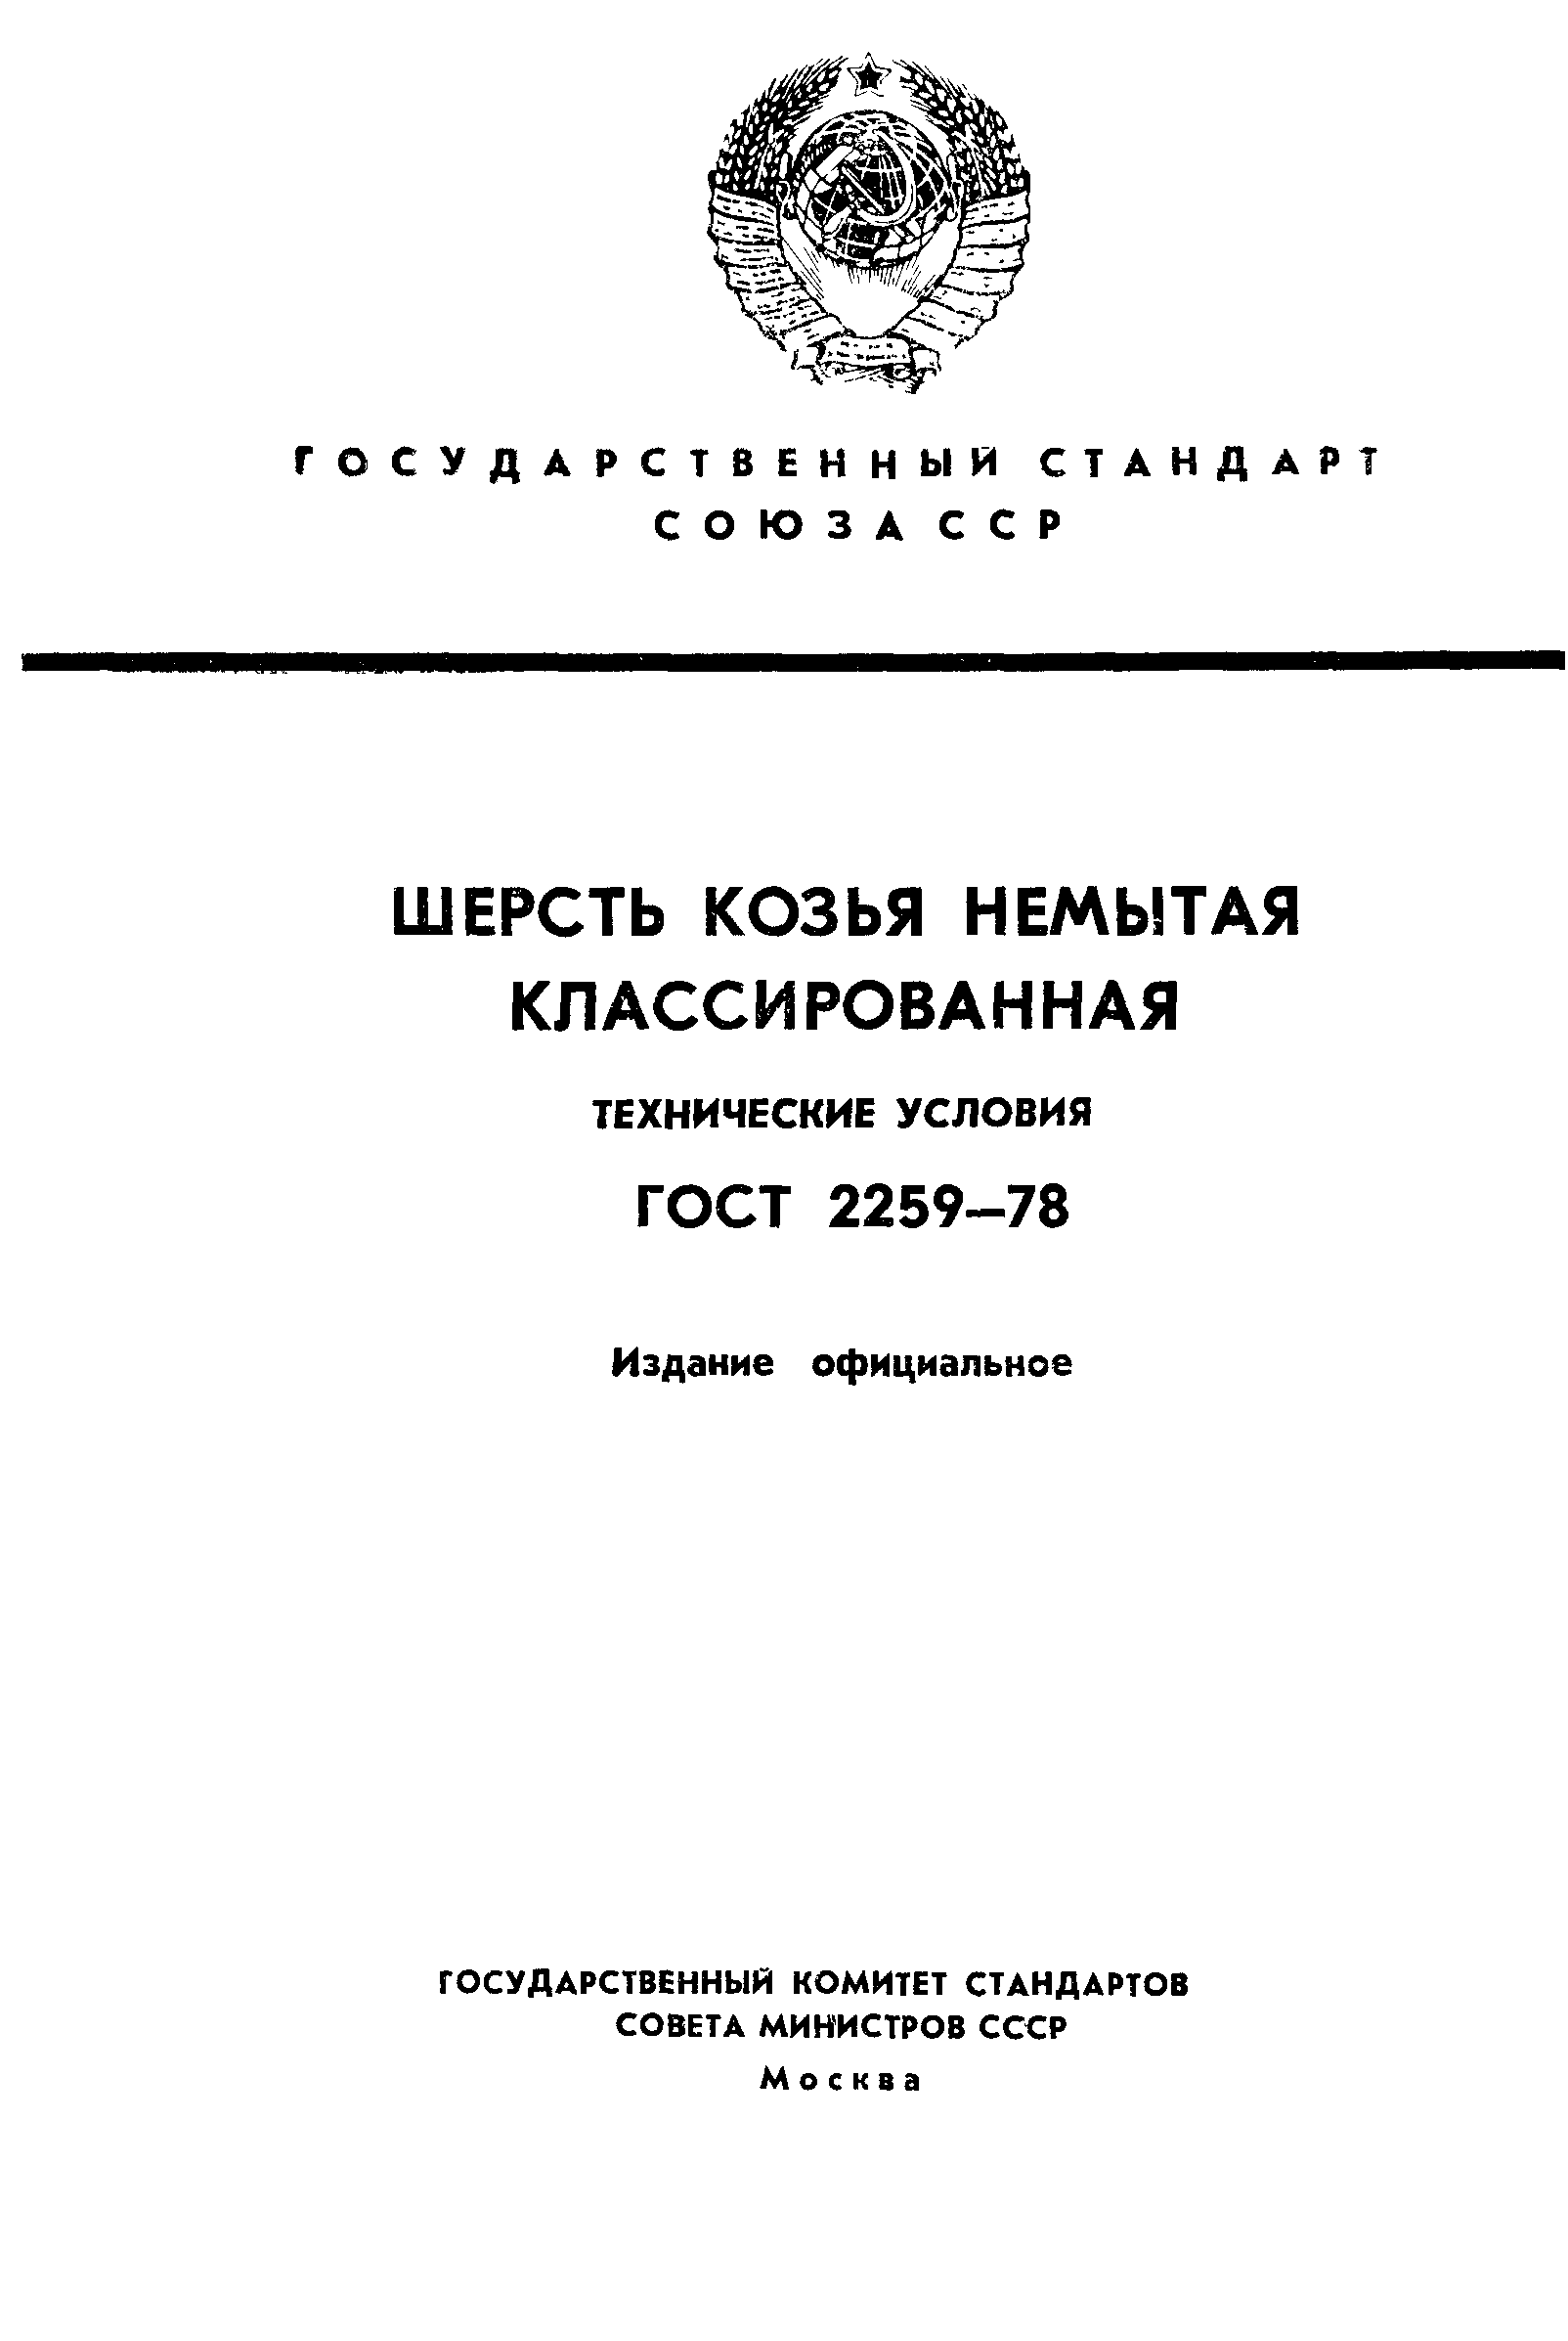 ГОСТ 2259-78